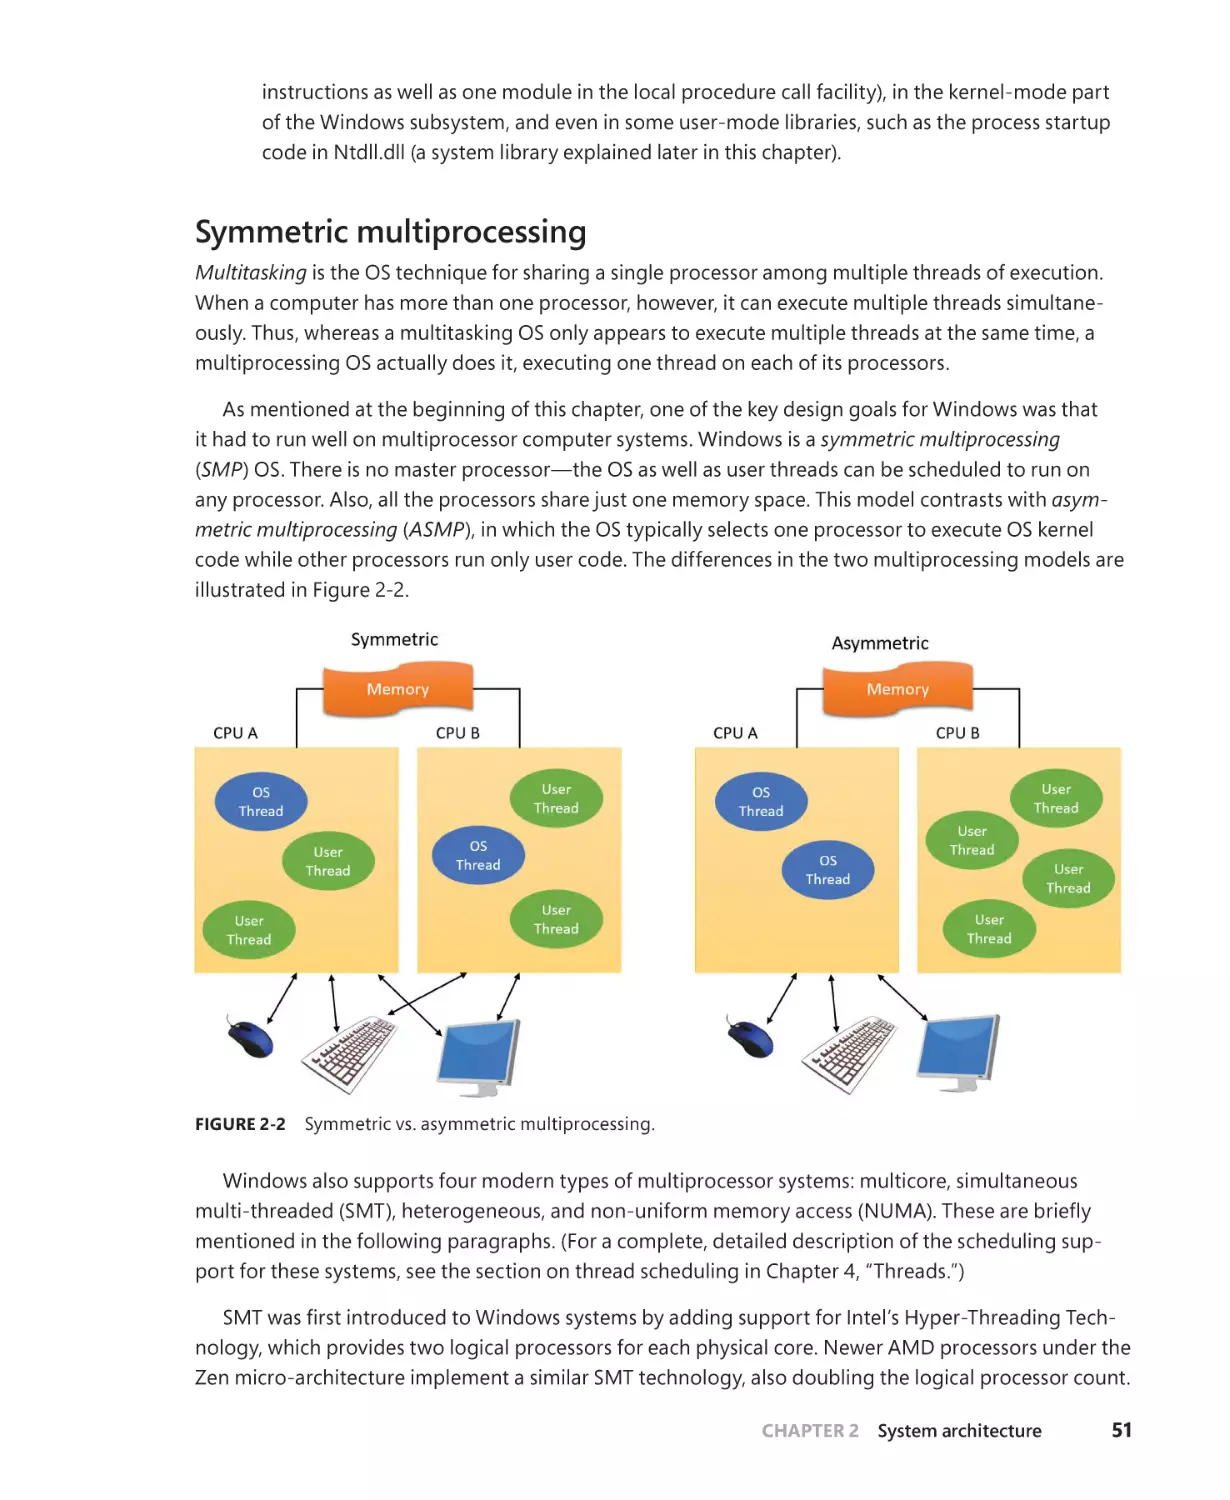 Symmetric multiprocessing